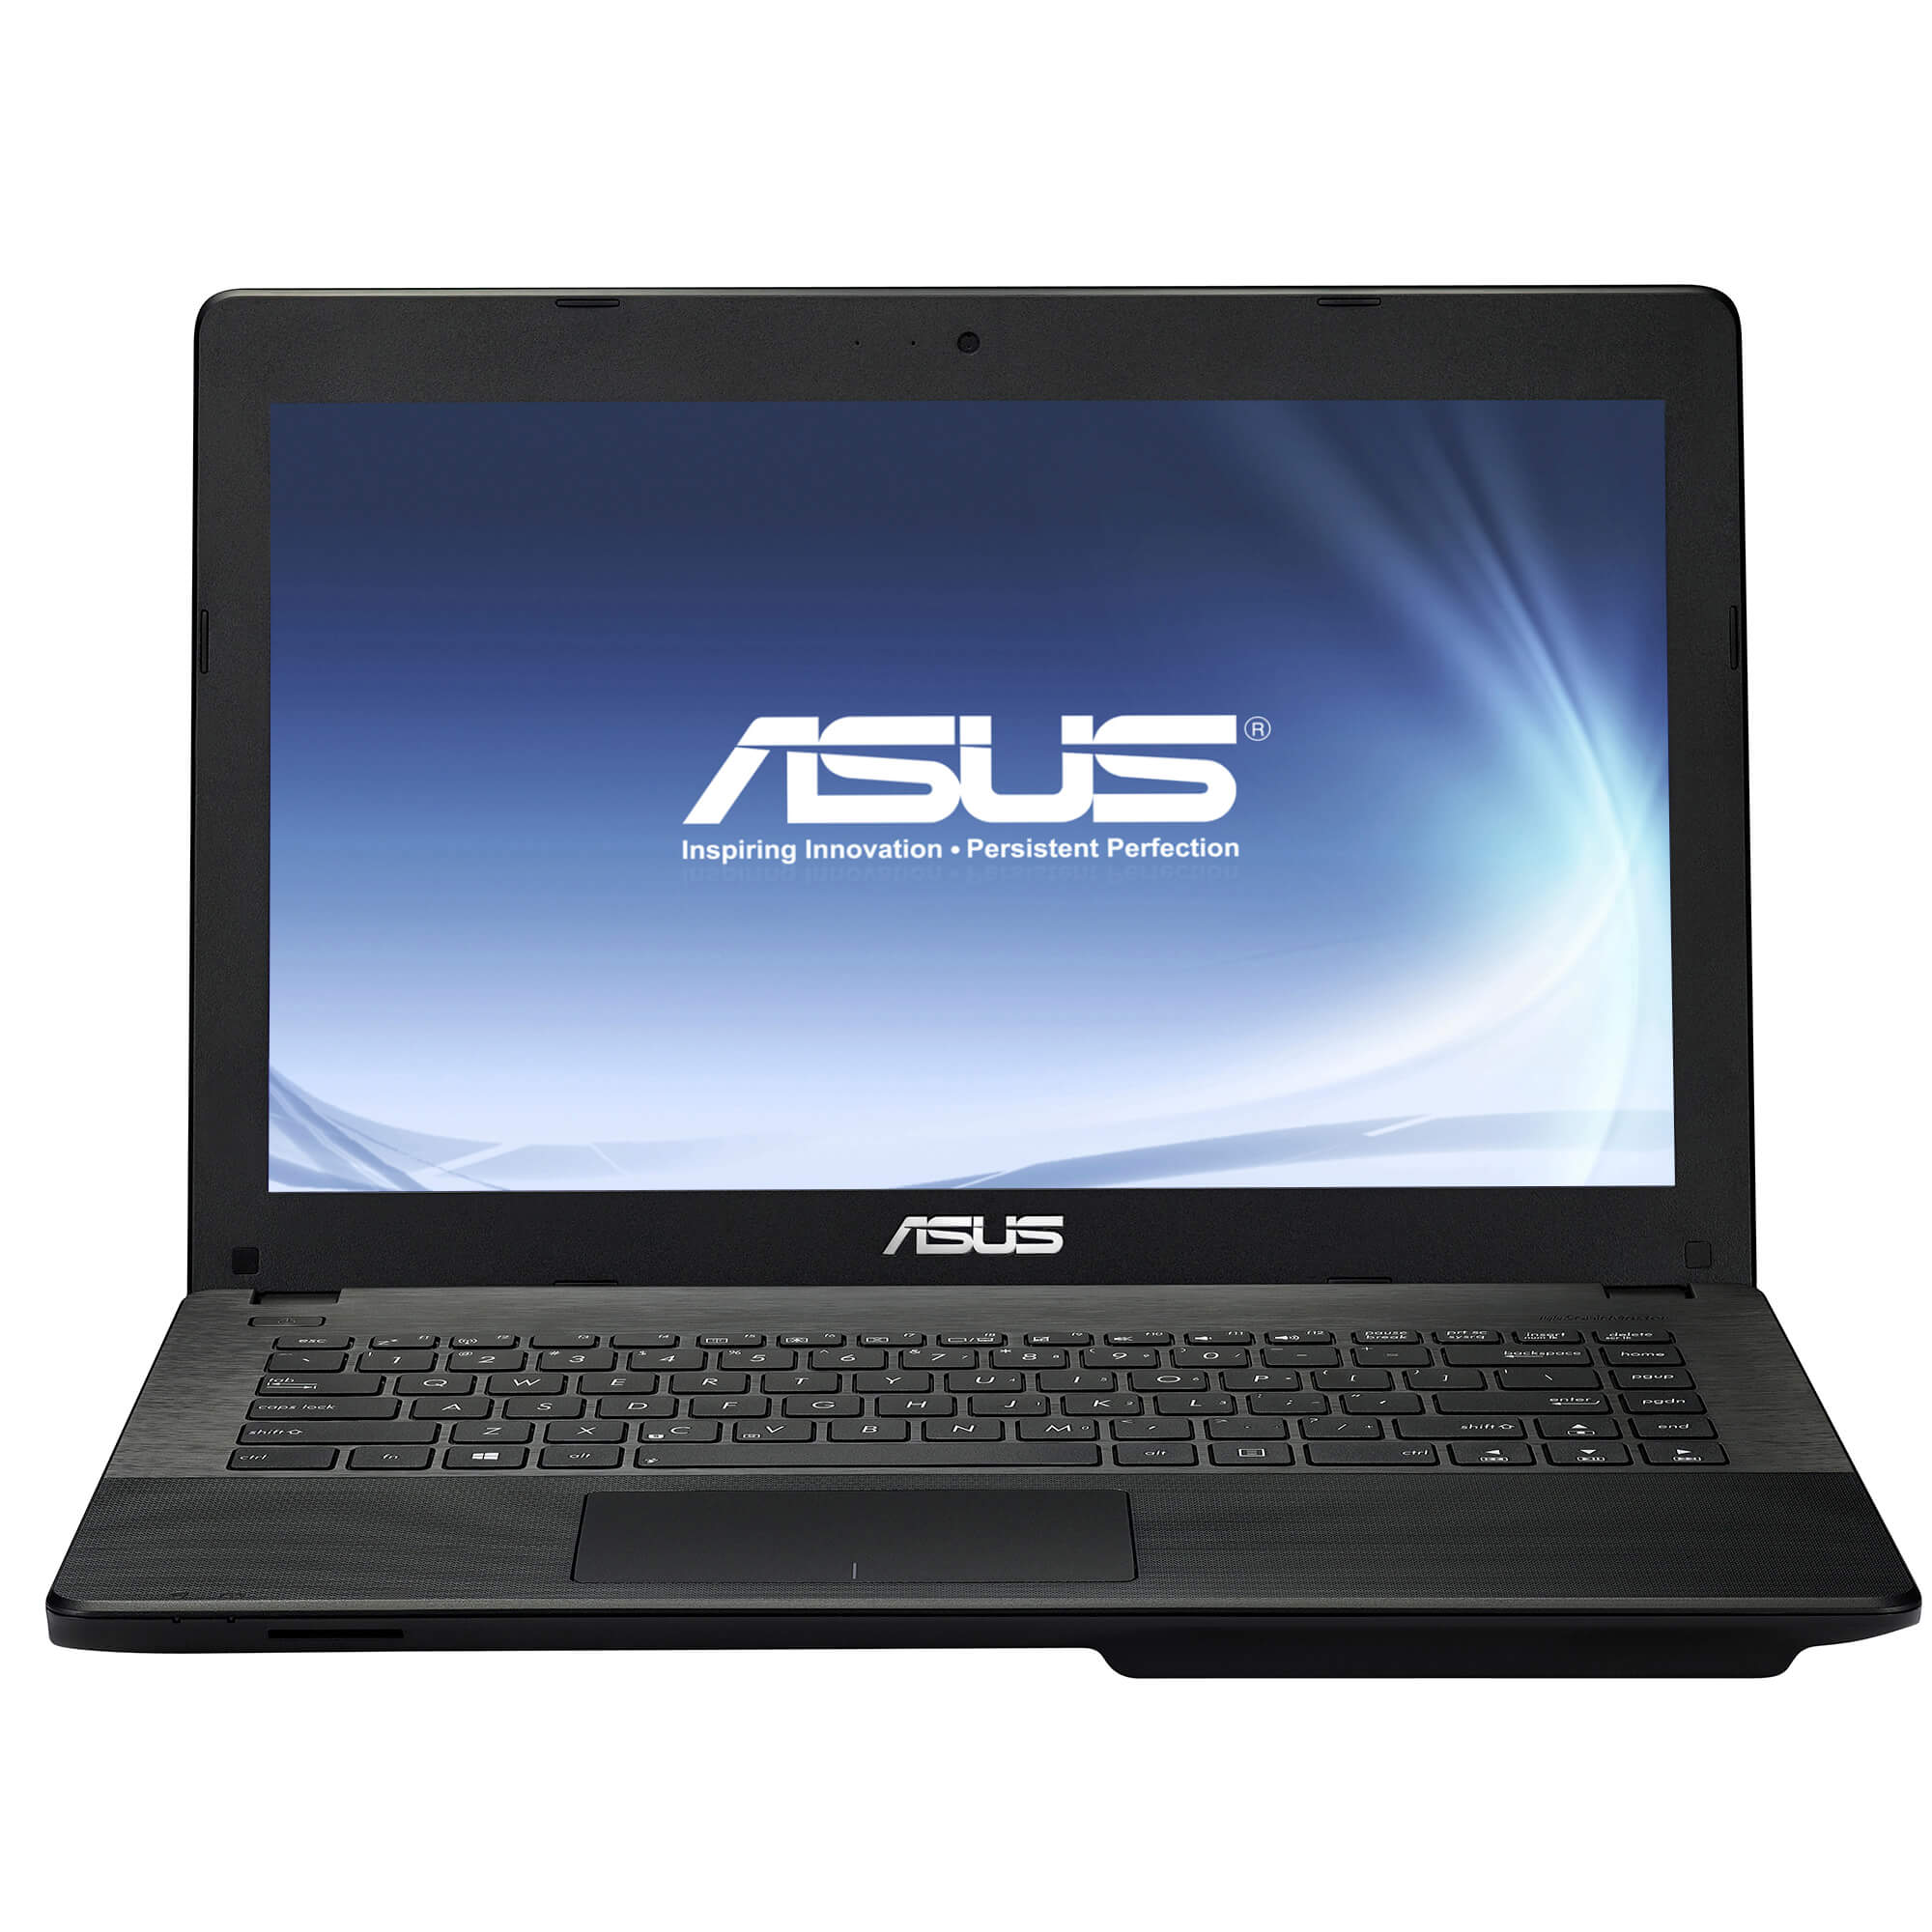  Laptop Asus X451MAV-VX297D, Intel Celeron N2840, 2GB DDR3, HDD 500GB, Intel HD Graphics, Free-DOS 